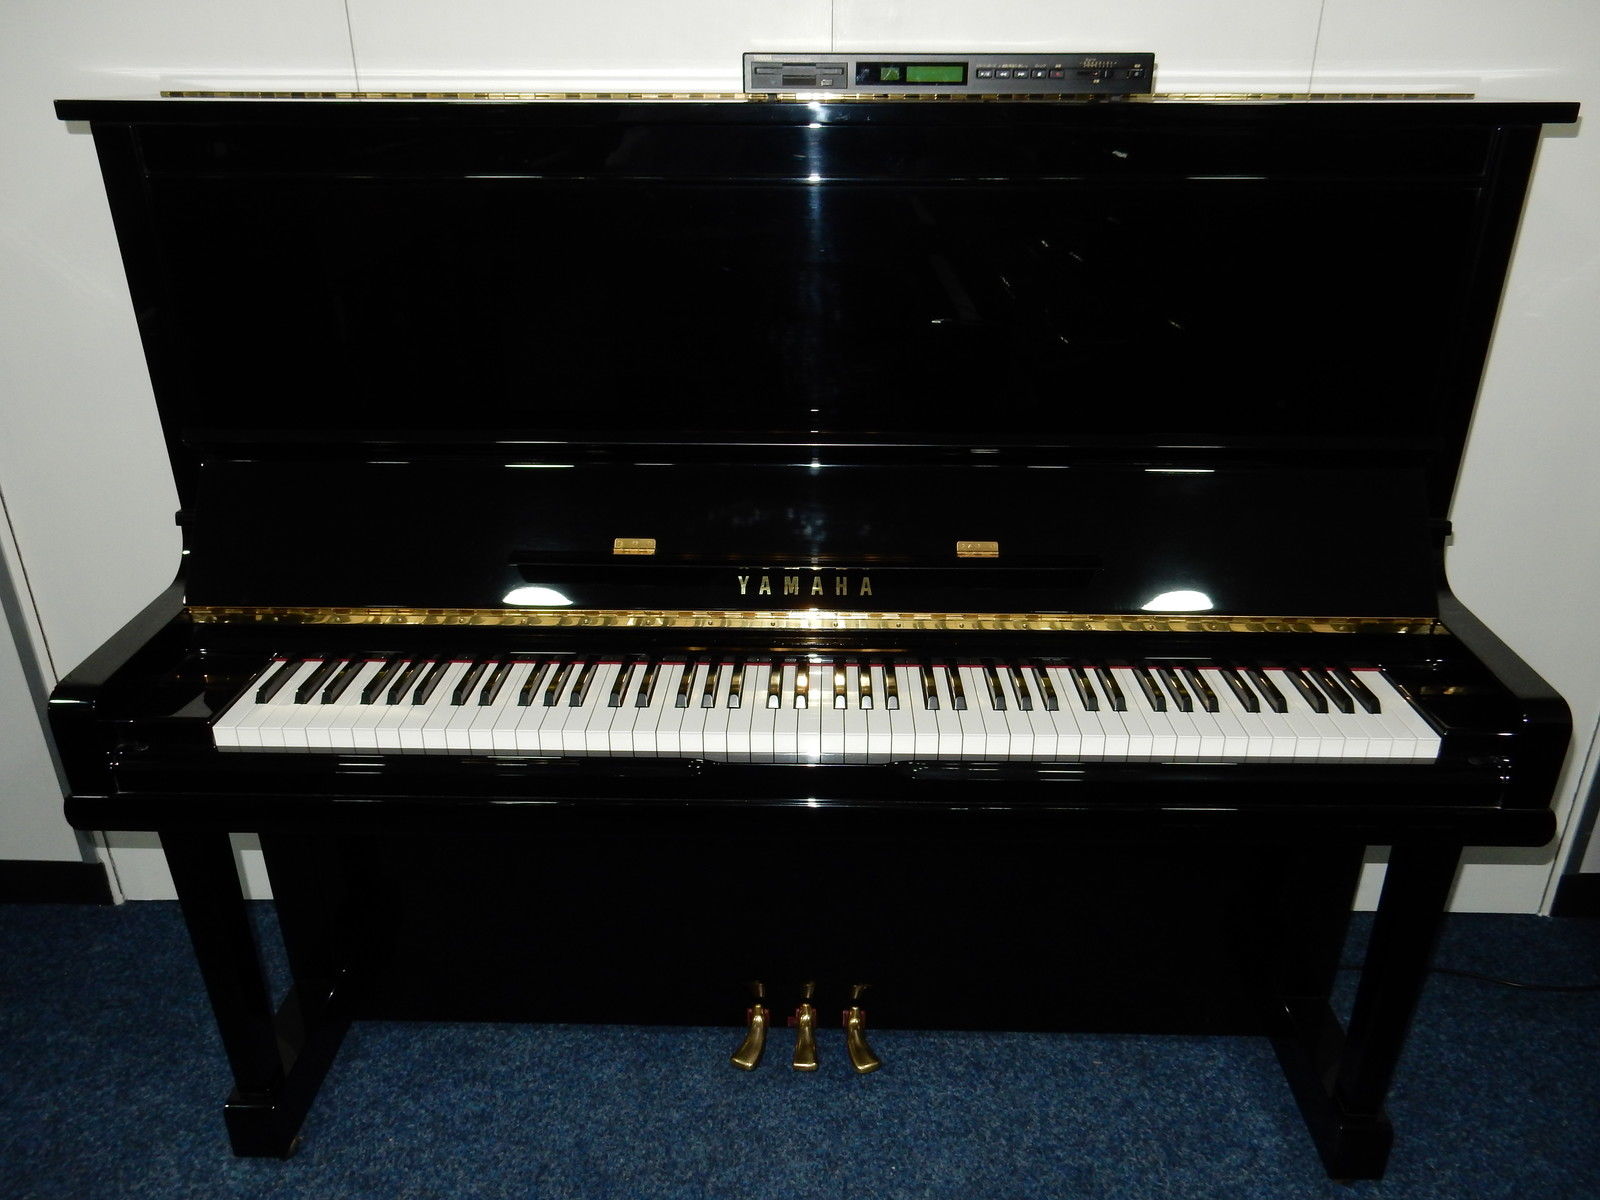 petrof piano serial number